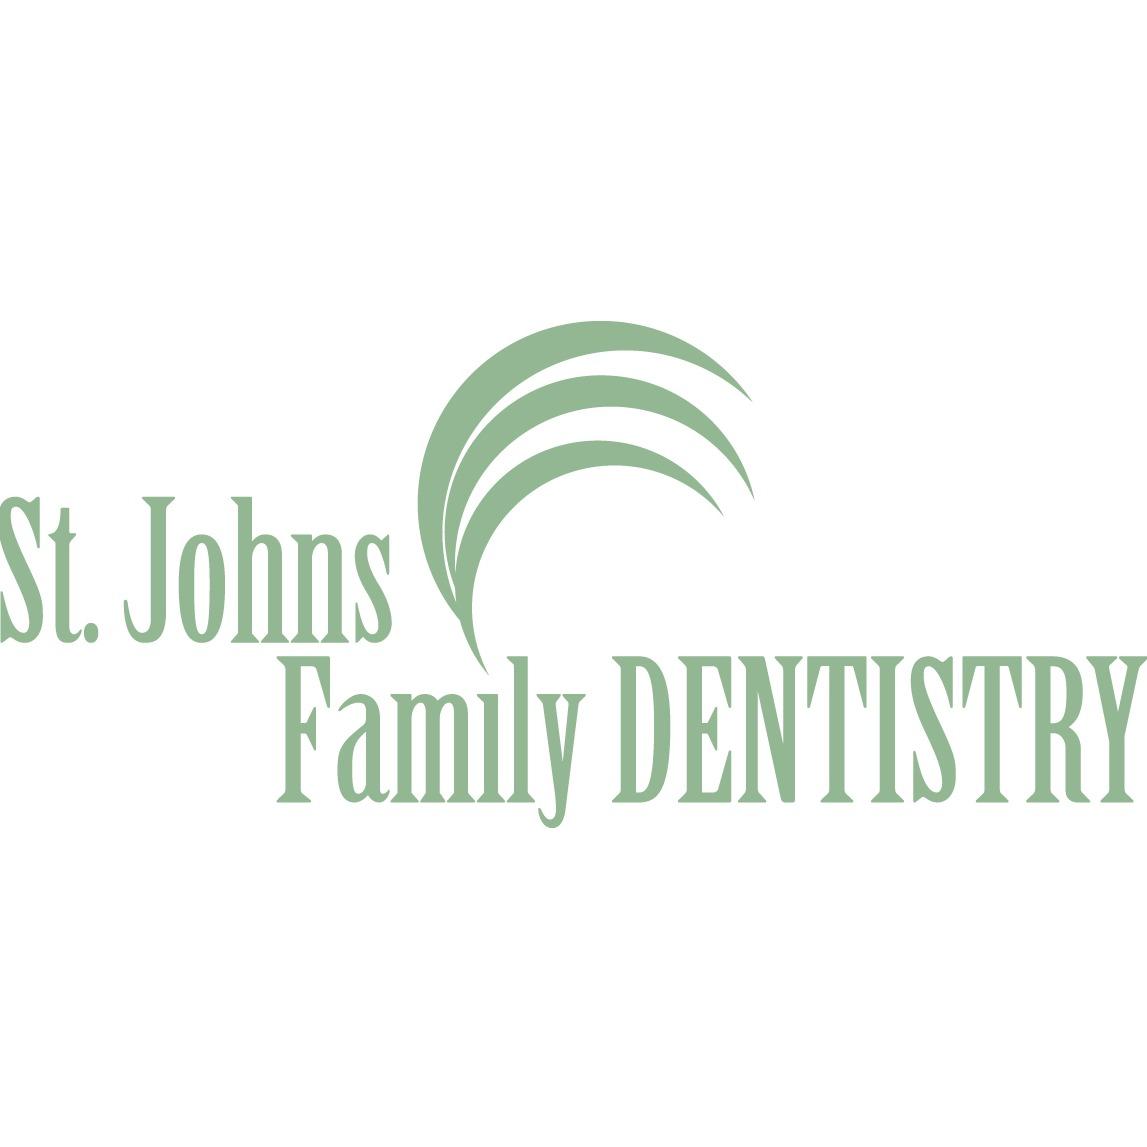 St Johns Family Dentistry - Saint Augustine, FL 32080 - (904)471-7300 | ShowMeLocal.com